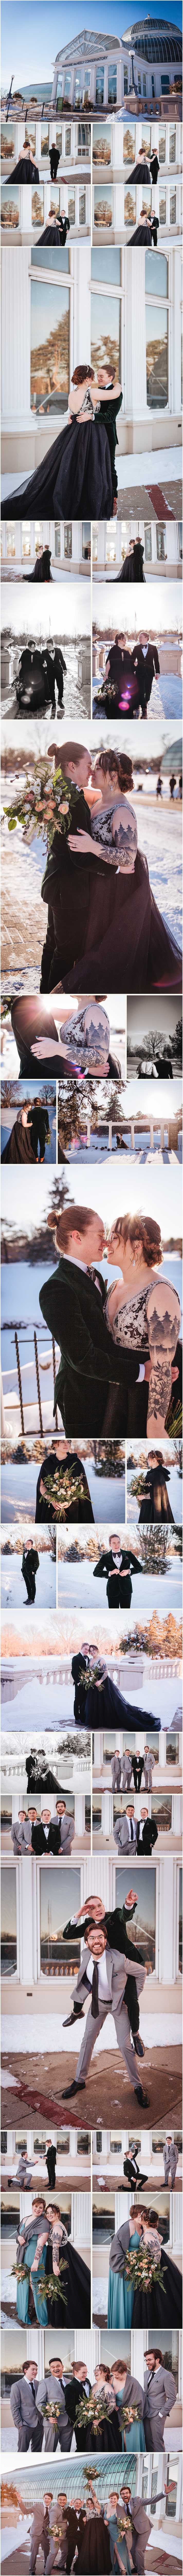 Winter wedding at the Como Conservatory Sunken Gardens in Saint Paul, Minnesota